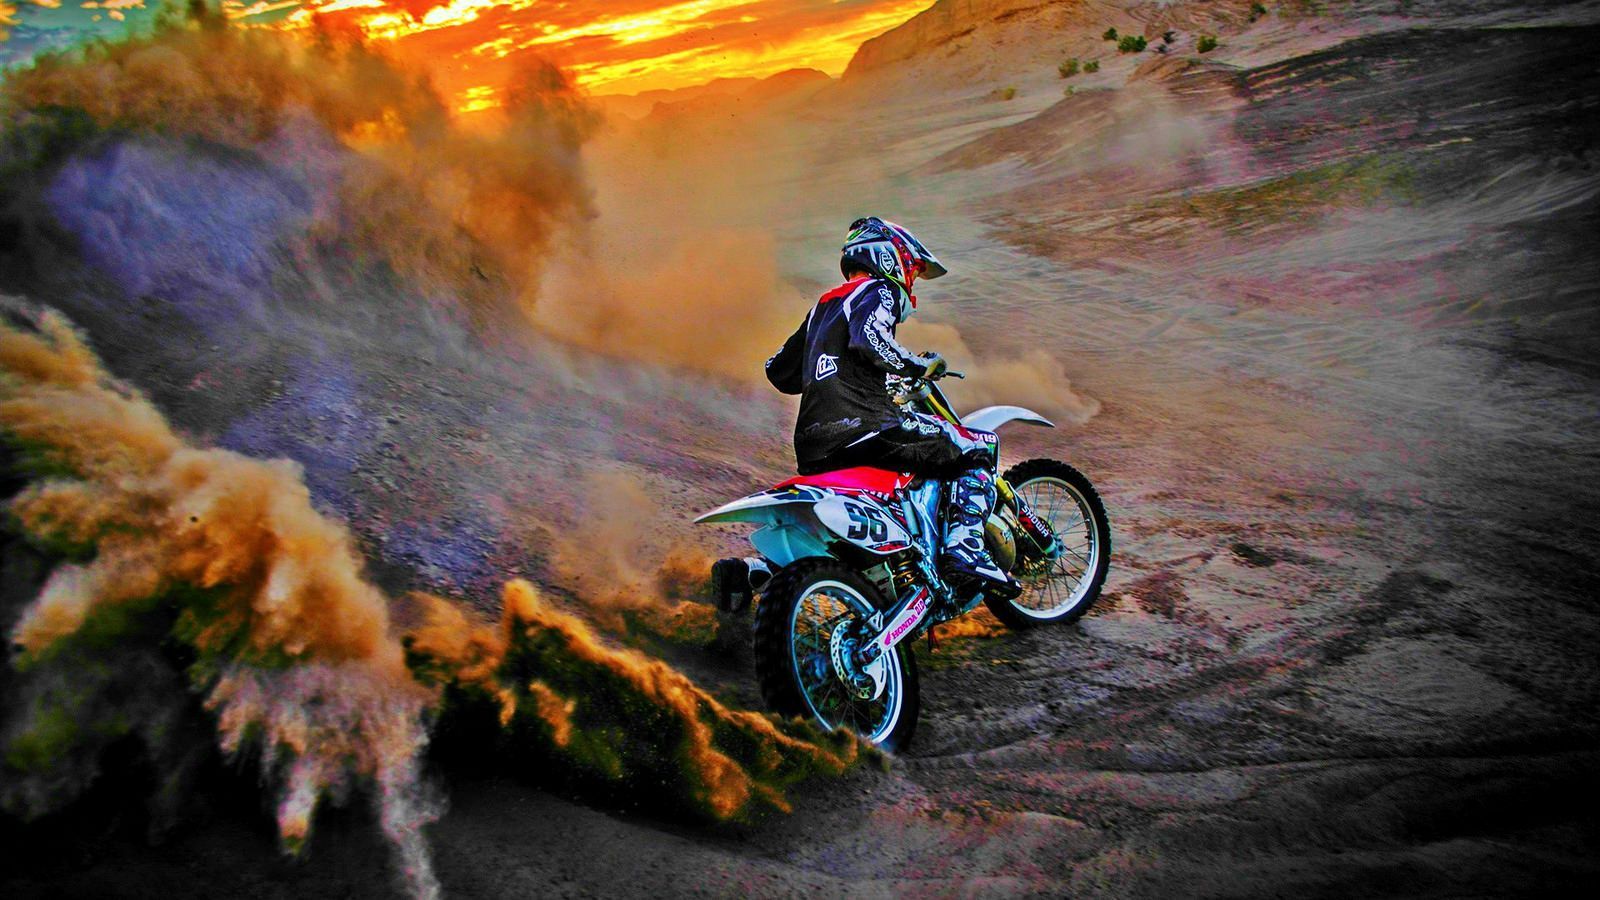 HD Freestyle Motocross Wallpaper For Desktop. Ktm Motocross, Cool Dirt Bikes, Freestyle Motocross